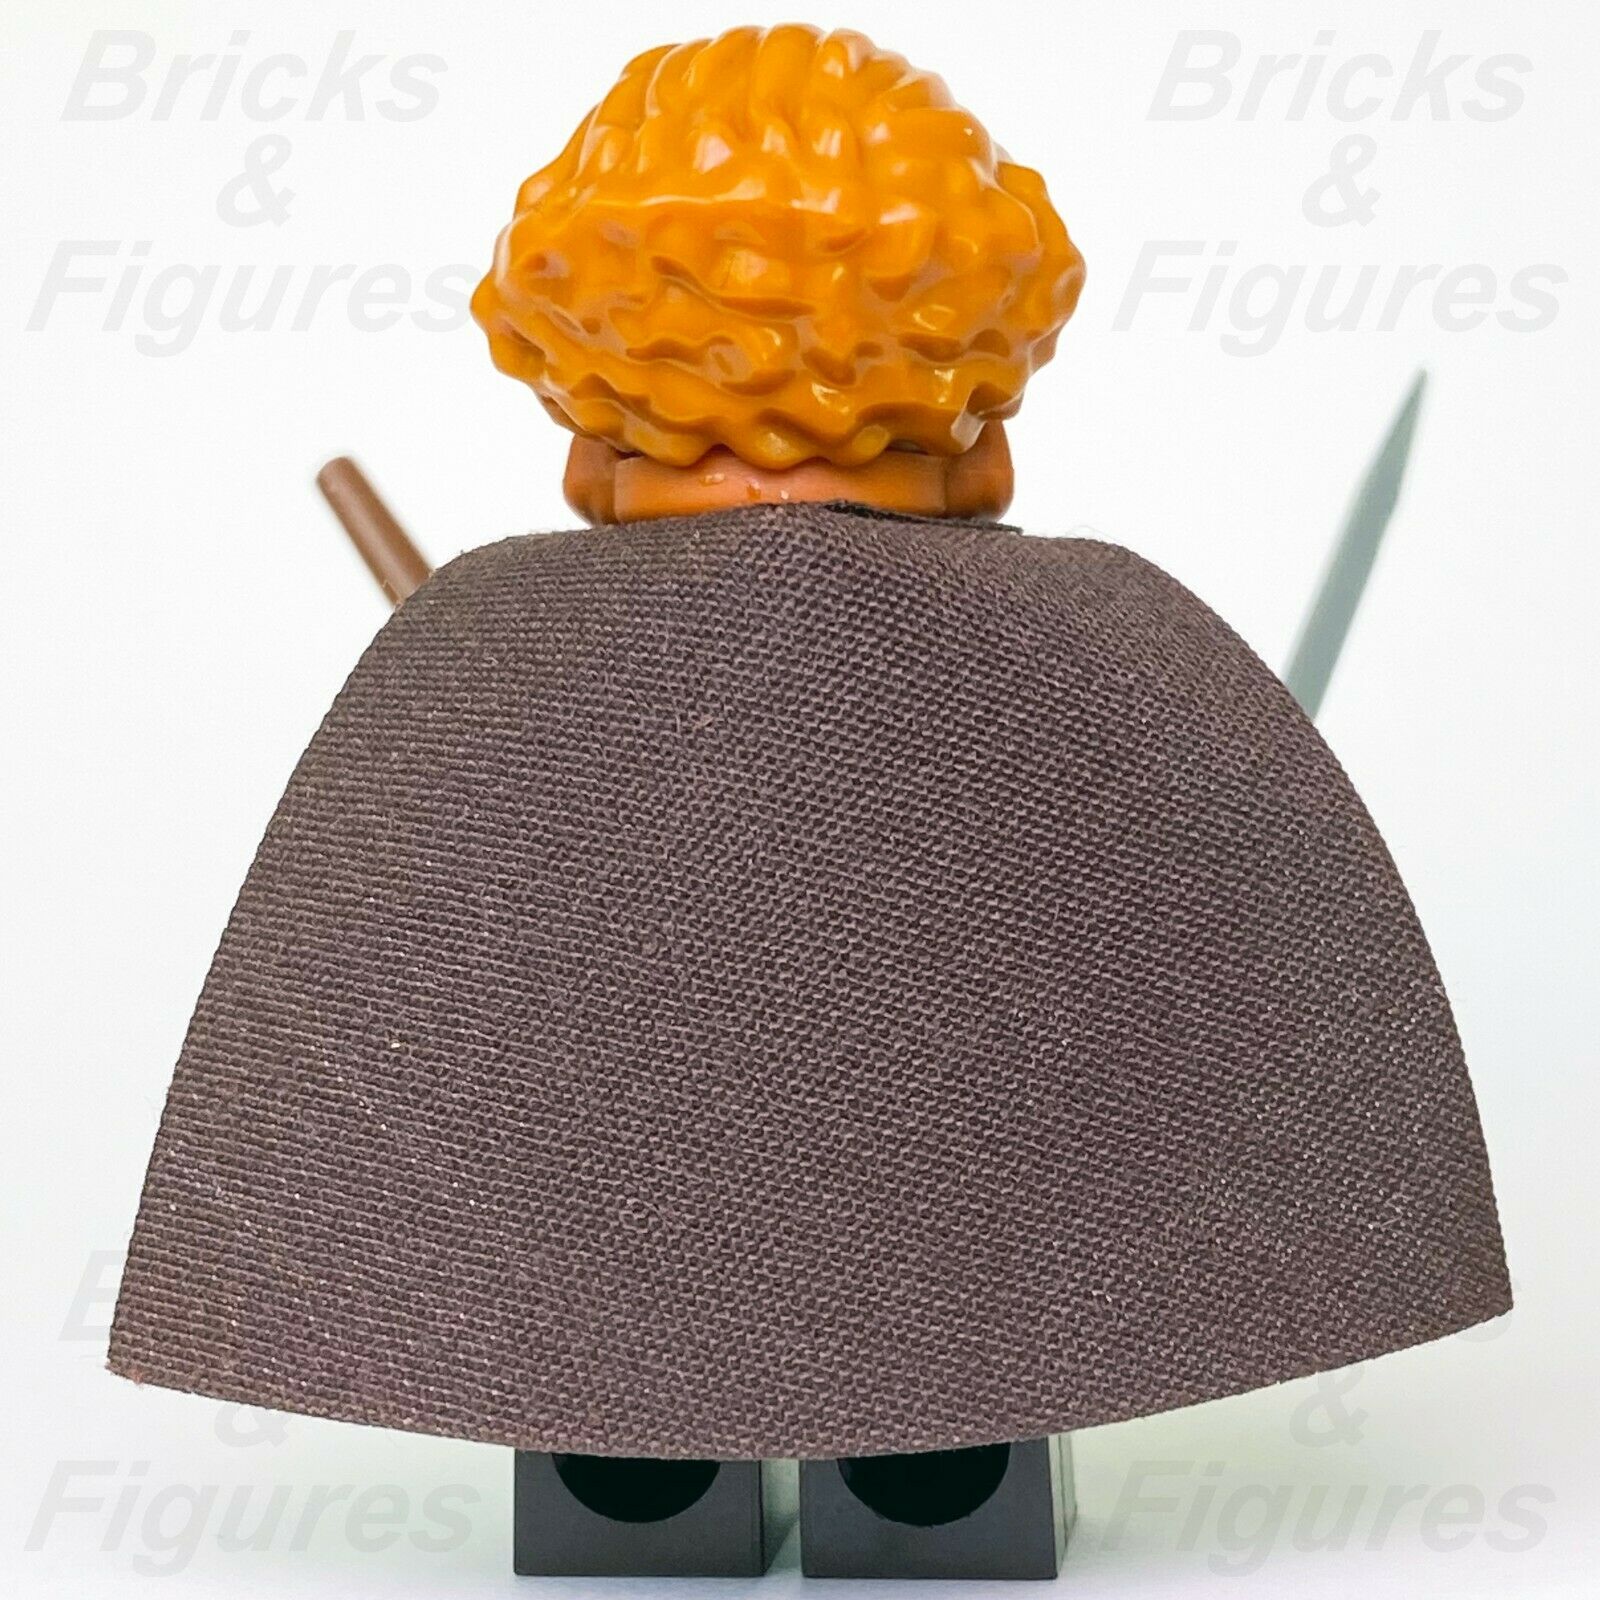 Harry Potter LEGO Godric Gryffindor Wizard Minifigure from set 71043 Genuine - Bricks & Figures